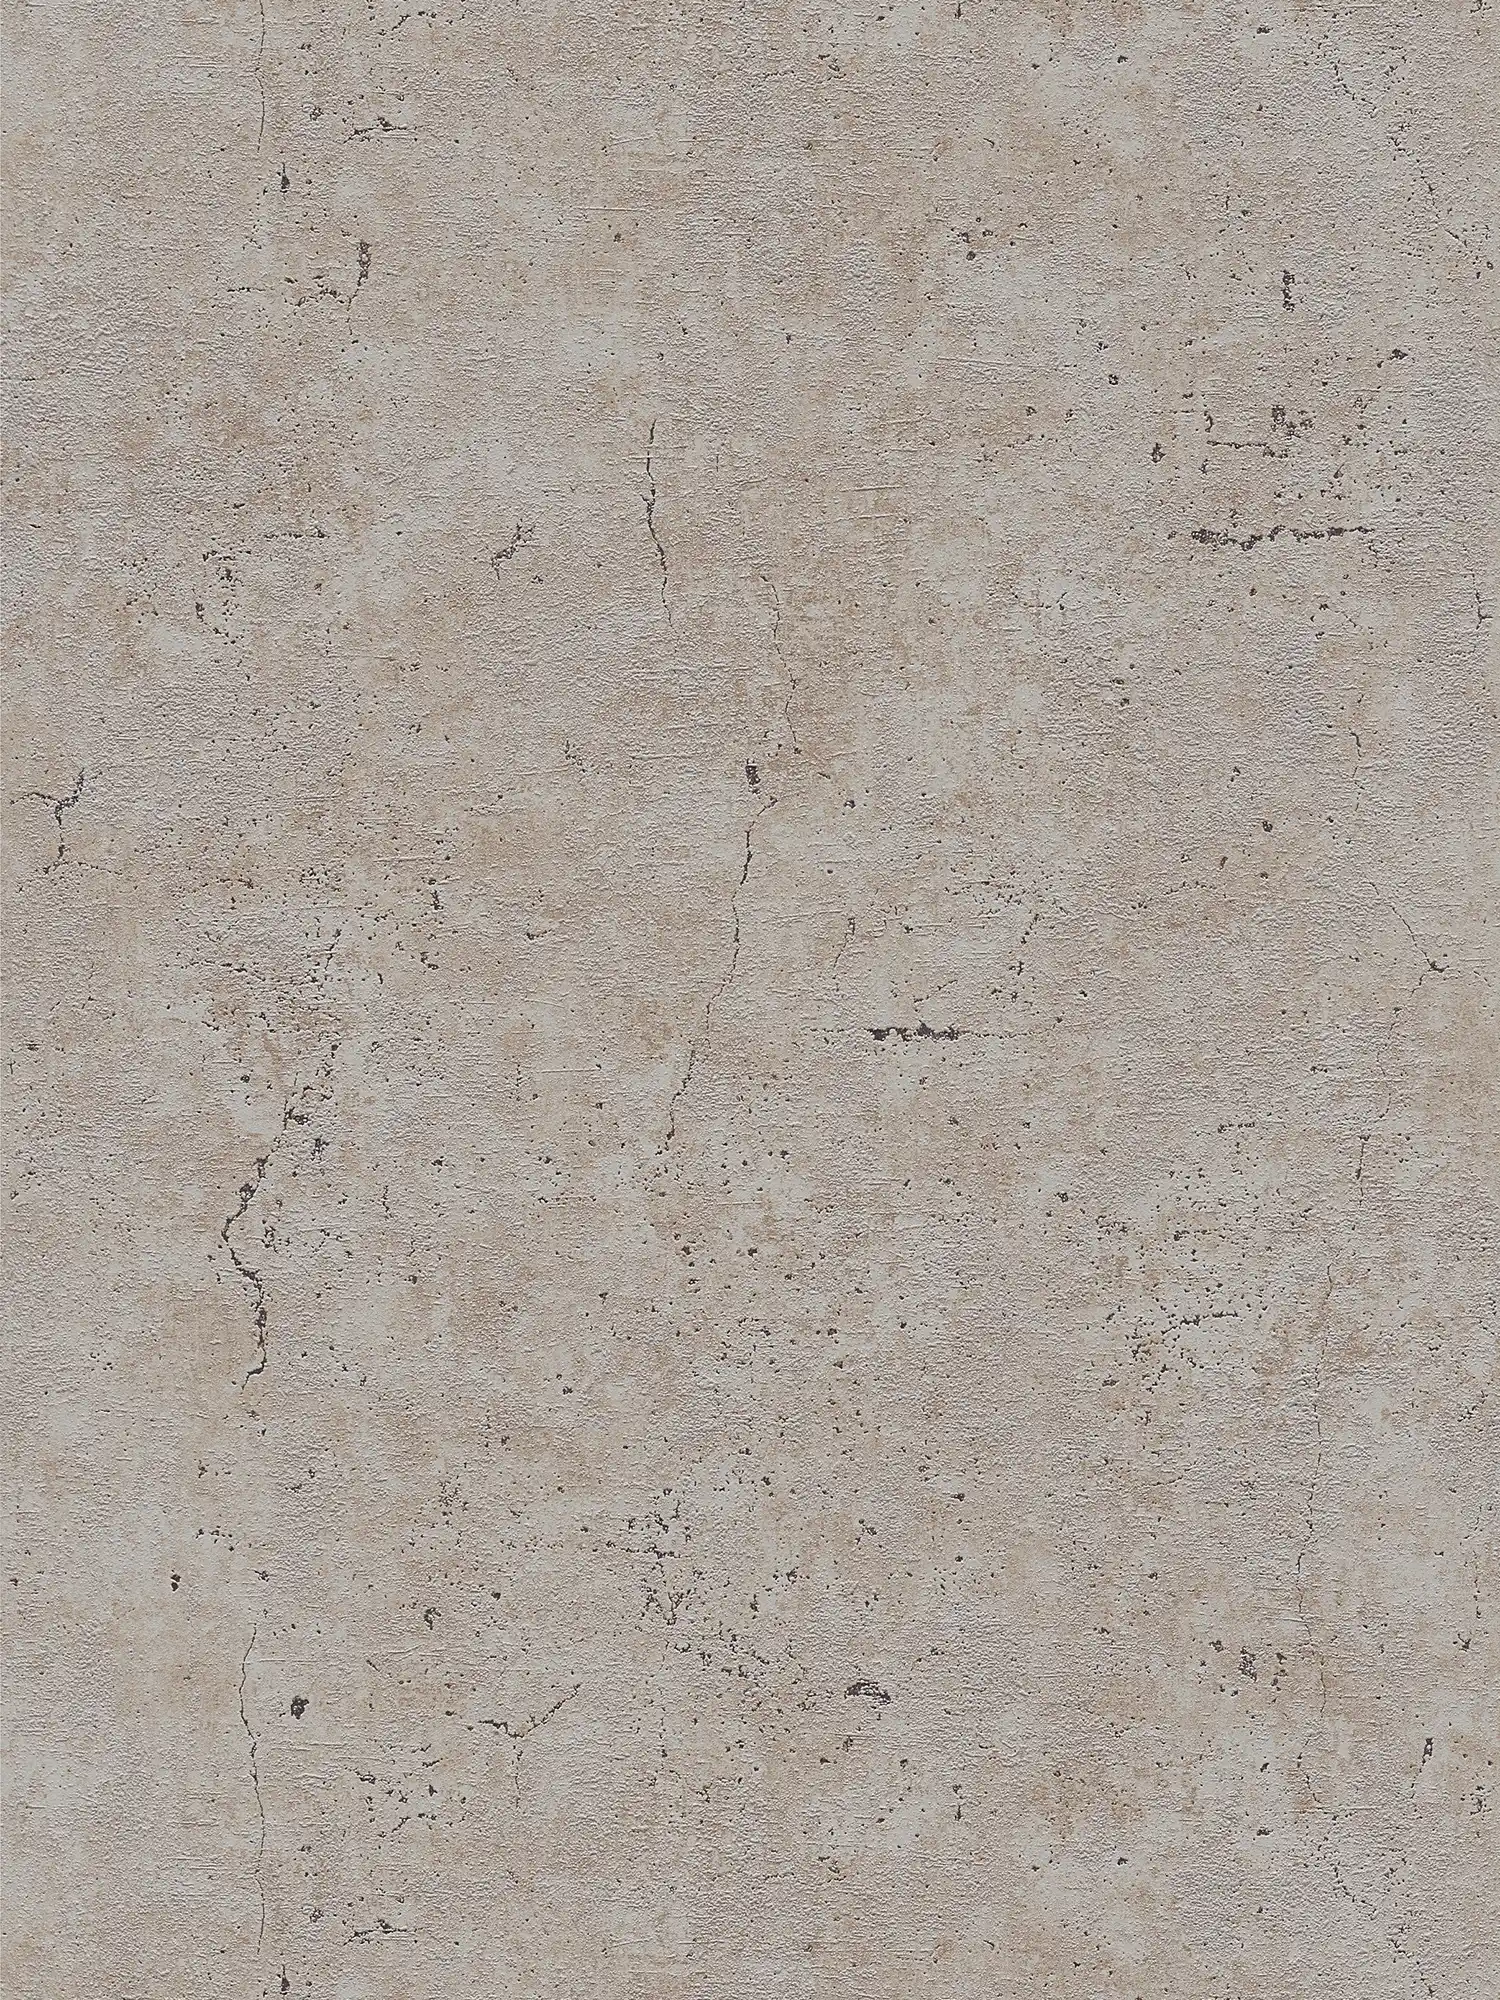         Wallpaper concrete look rustic in industrial style - grey, brown
    